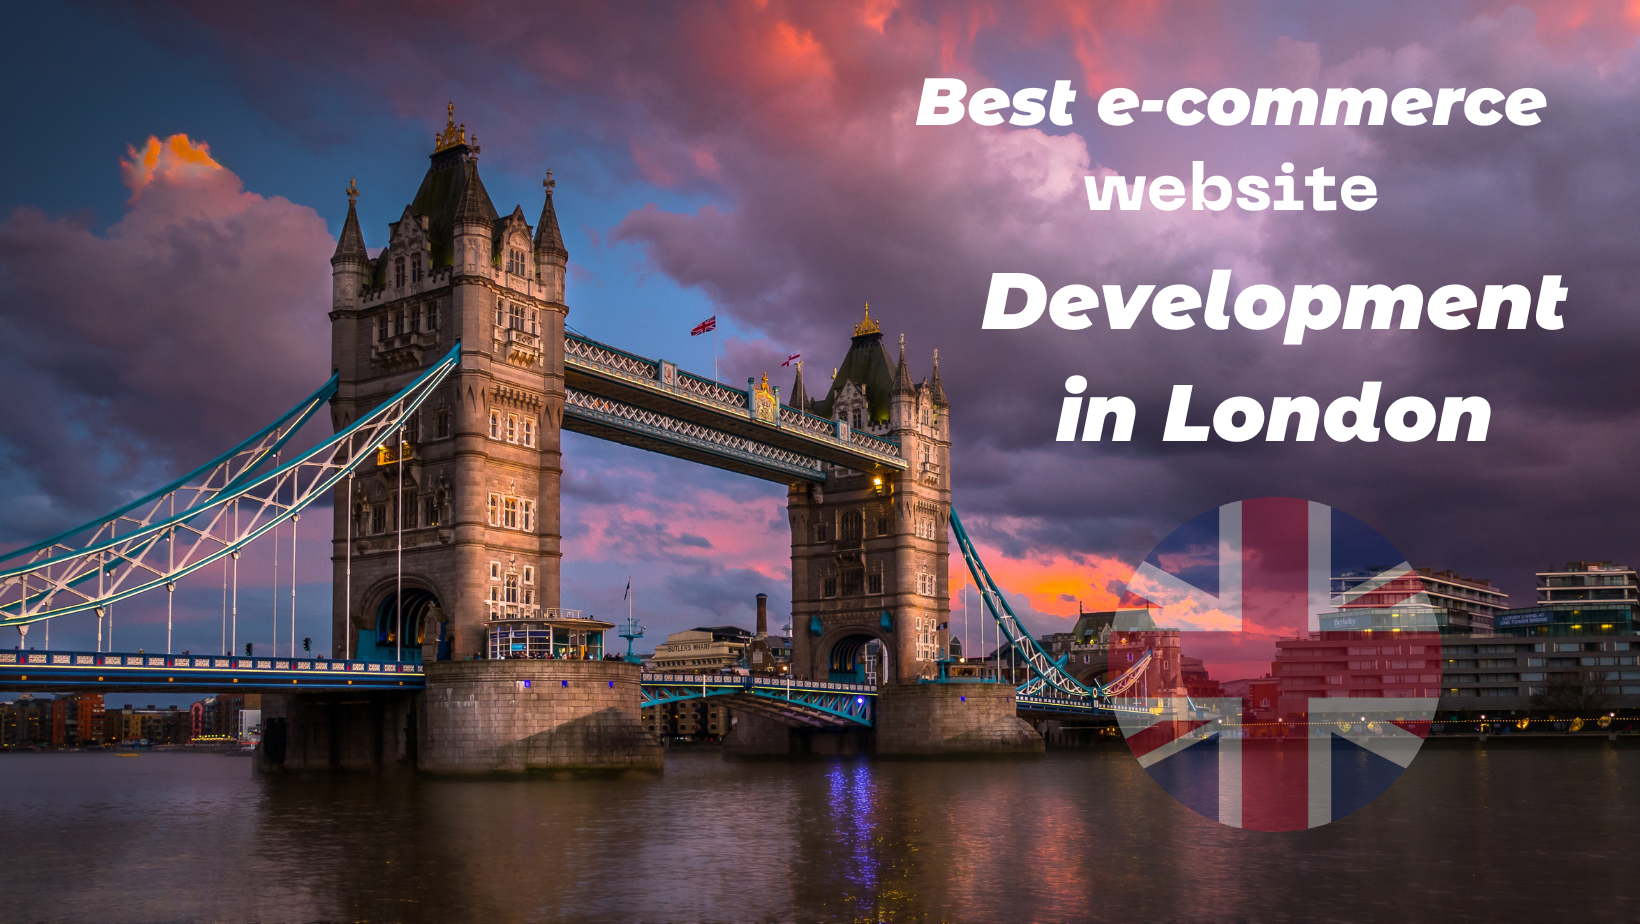 Best e-commerce website Development in London